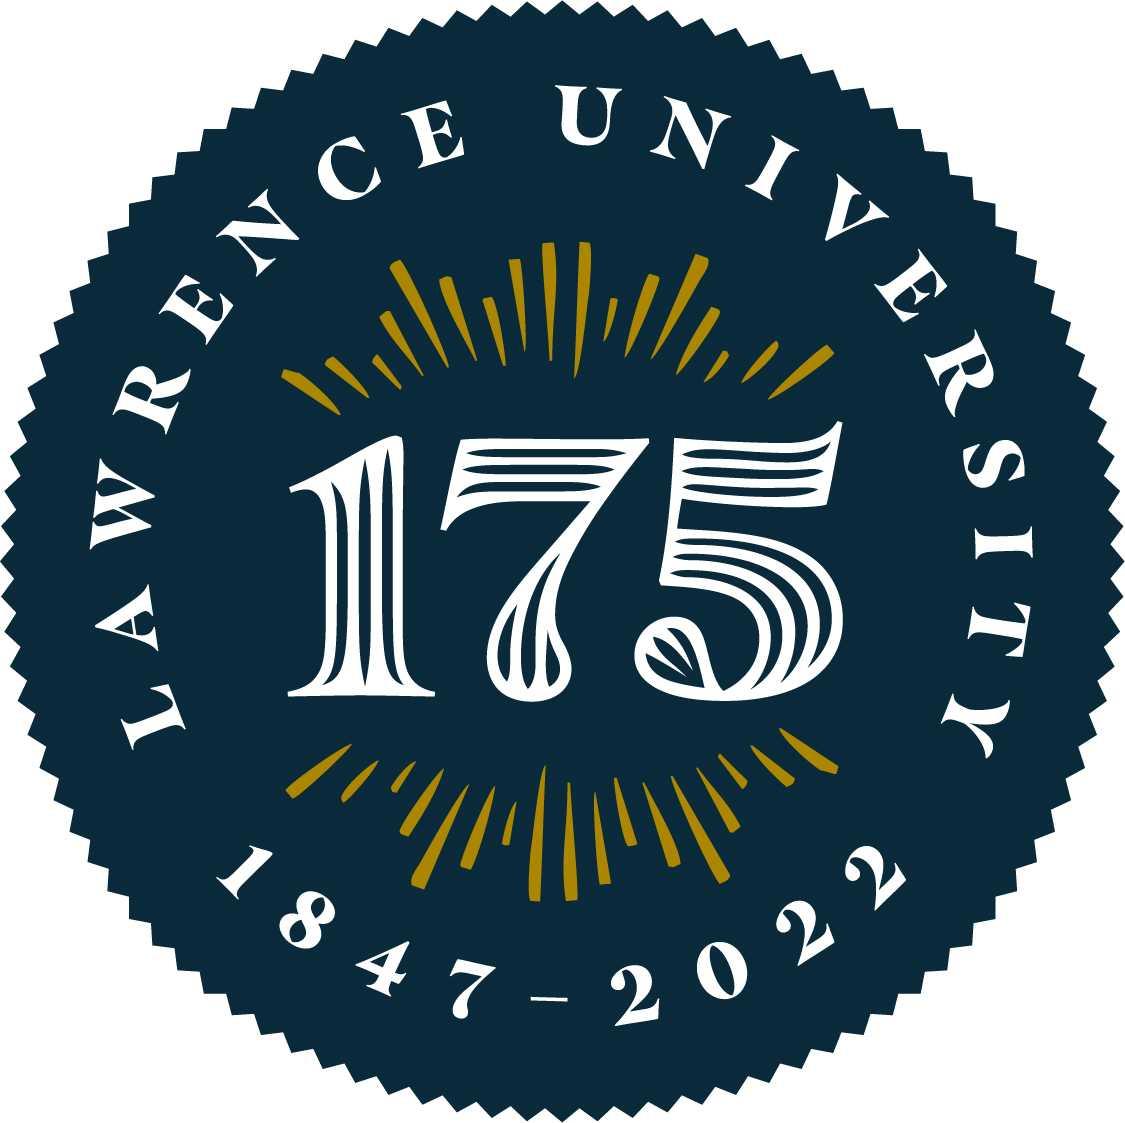 Lawrence's 175th anniversary logo